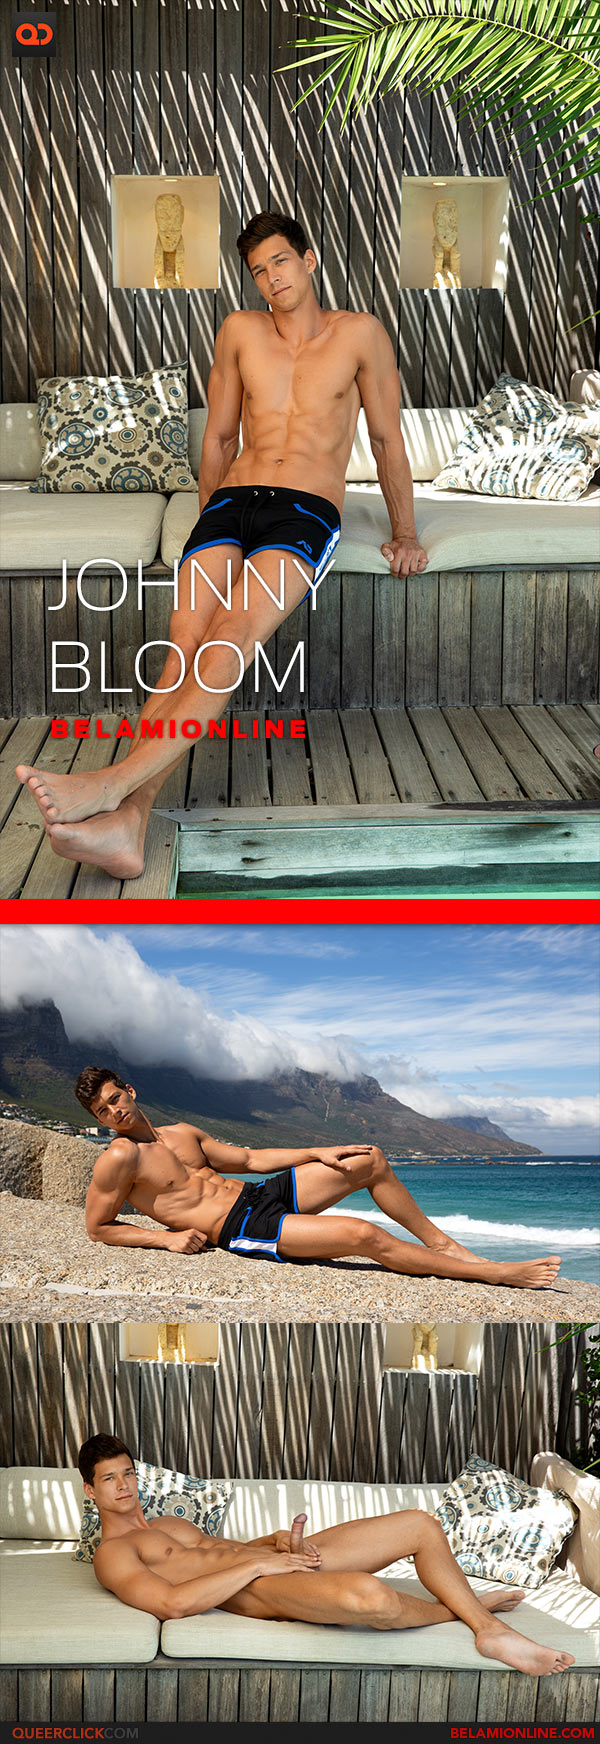 BelAmi Online: Johnny Bloom - Pin Ups / Model of the Week